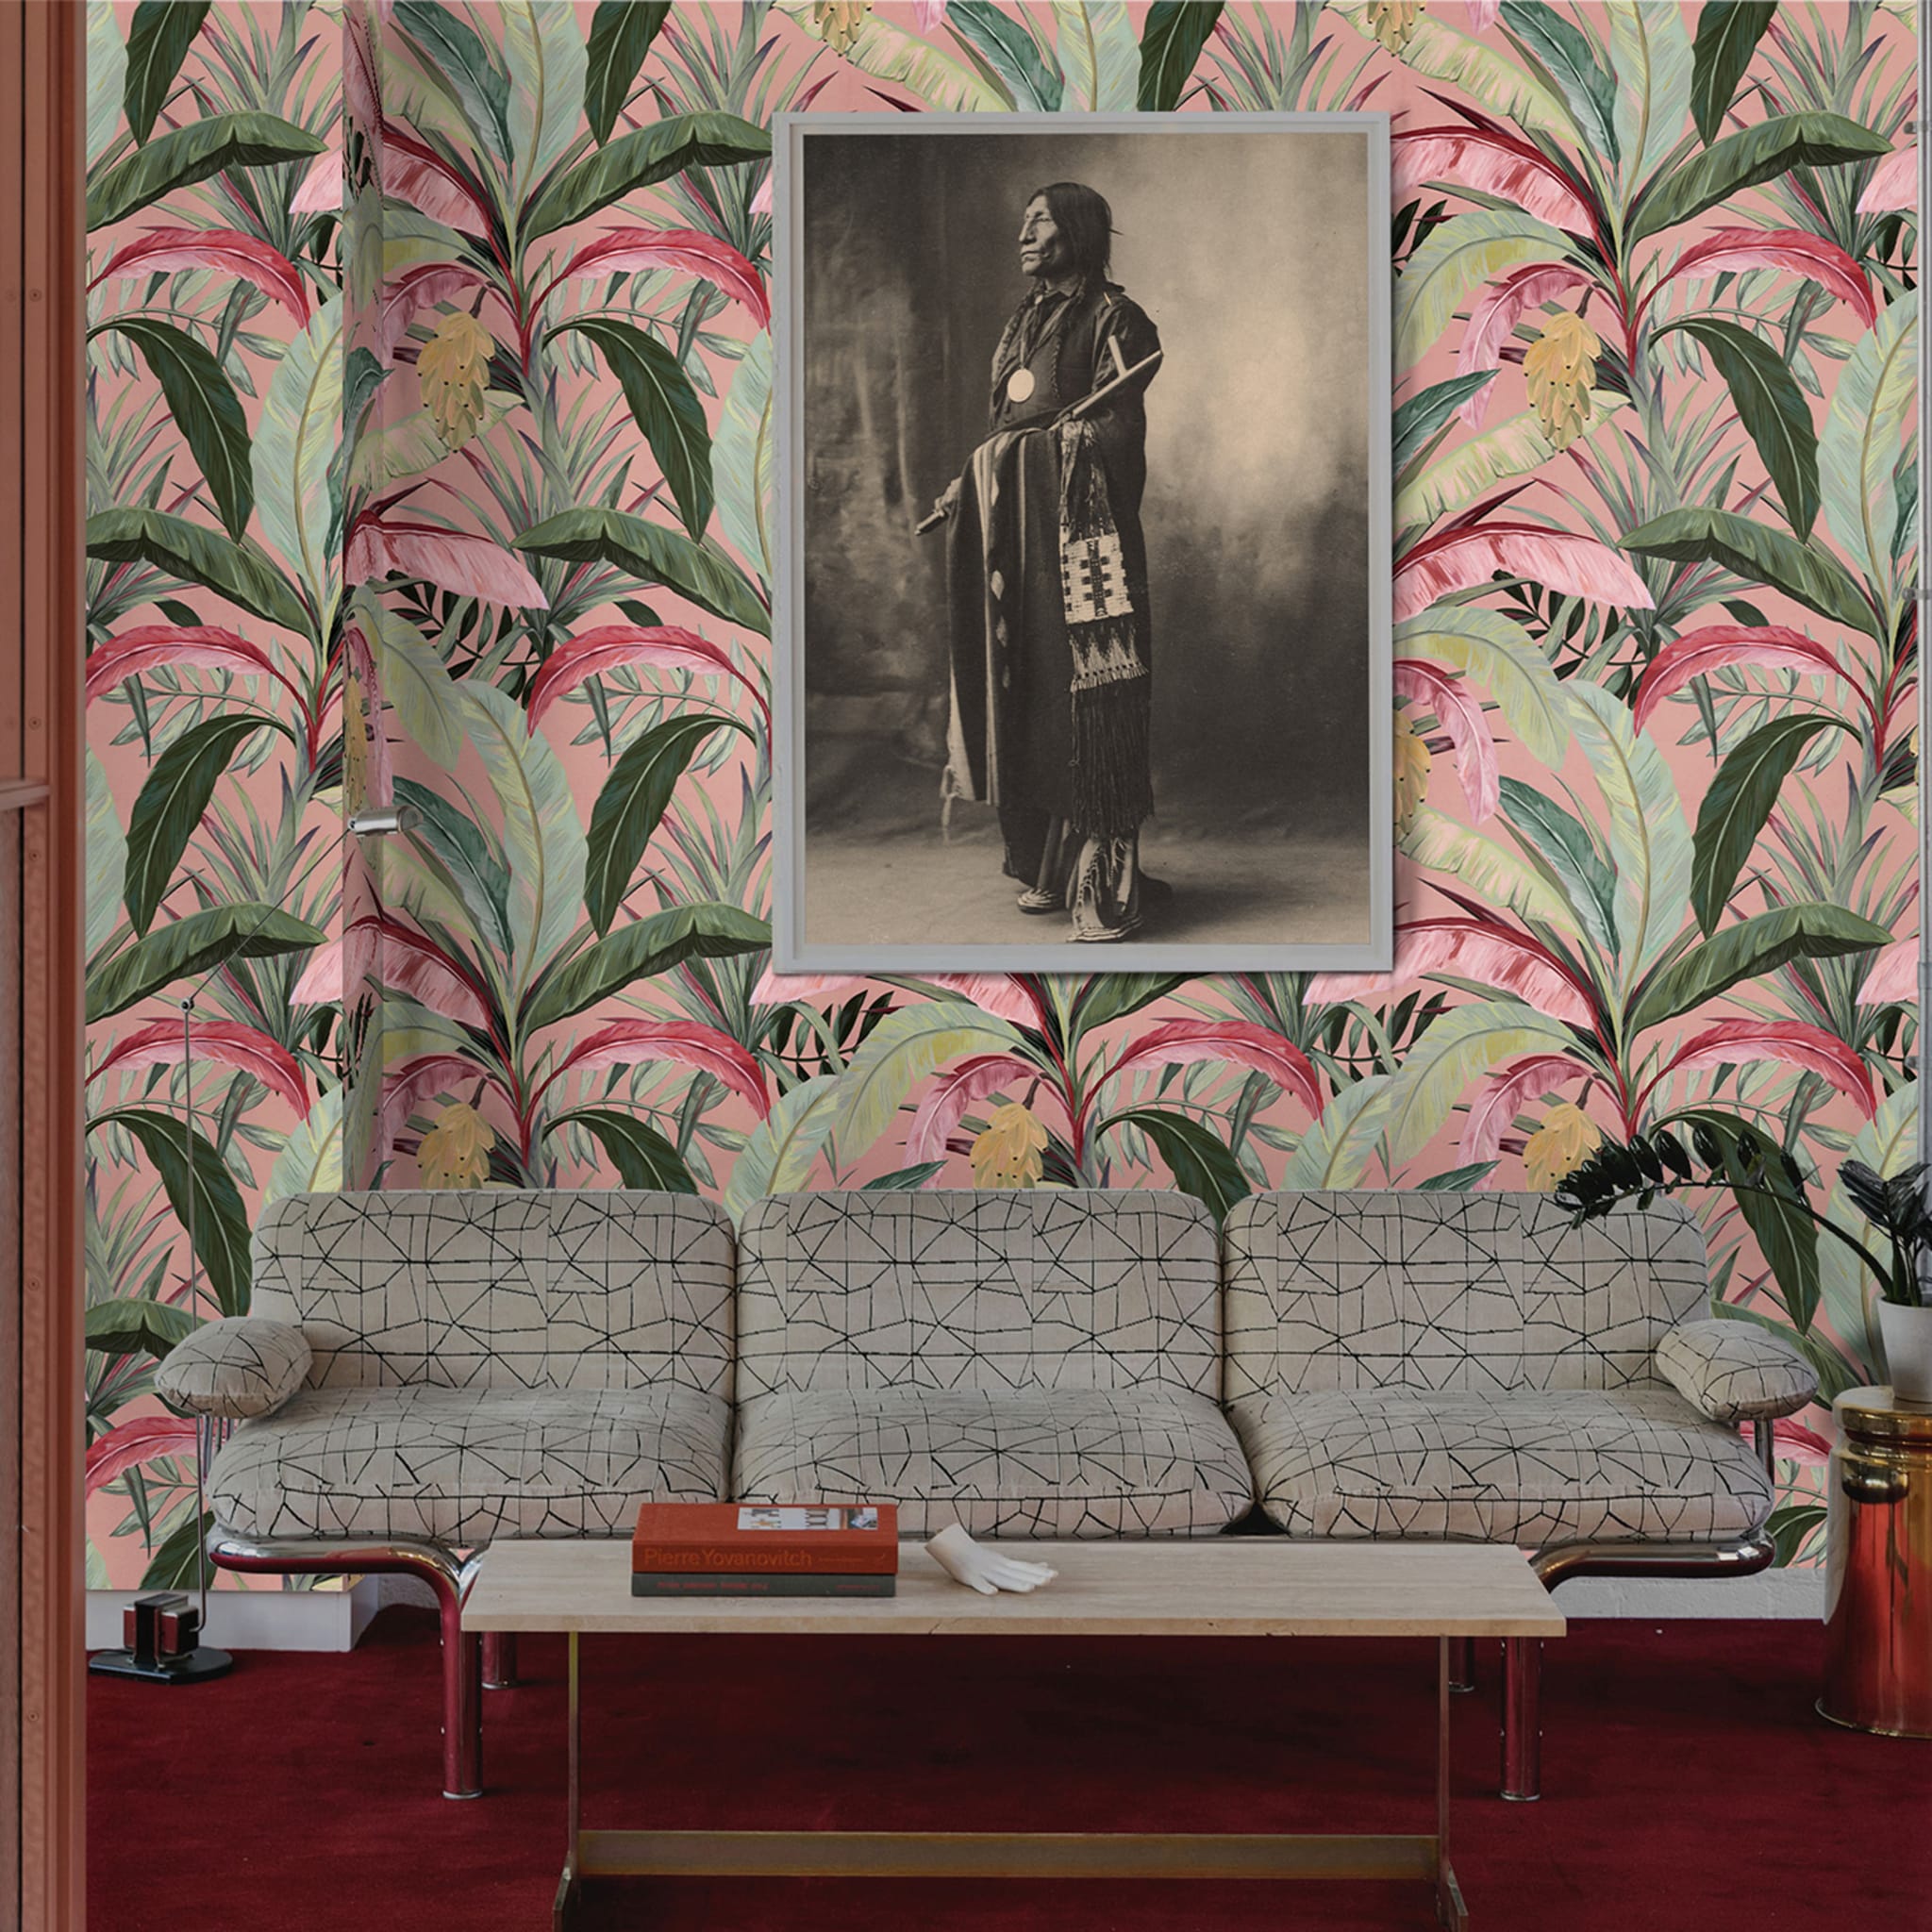 Banana Leaves Jungle Wallpaper - Alternative view 2